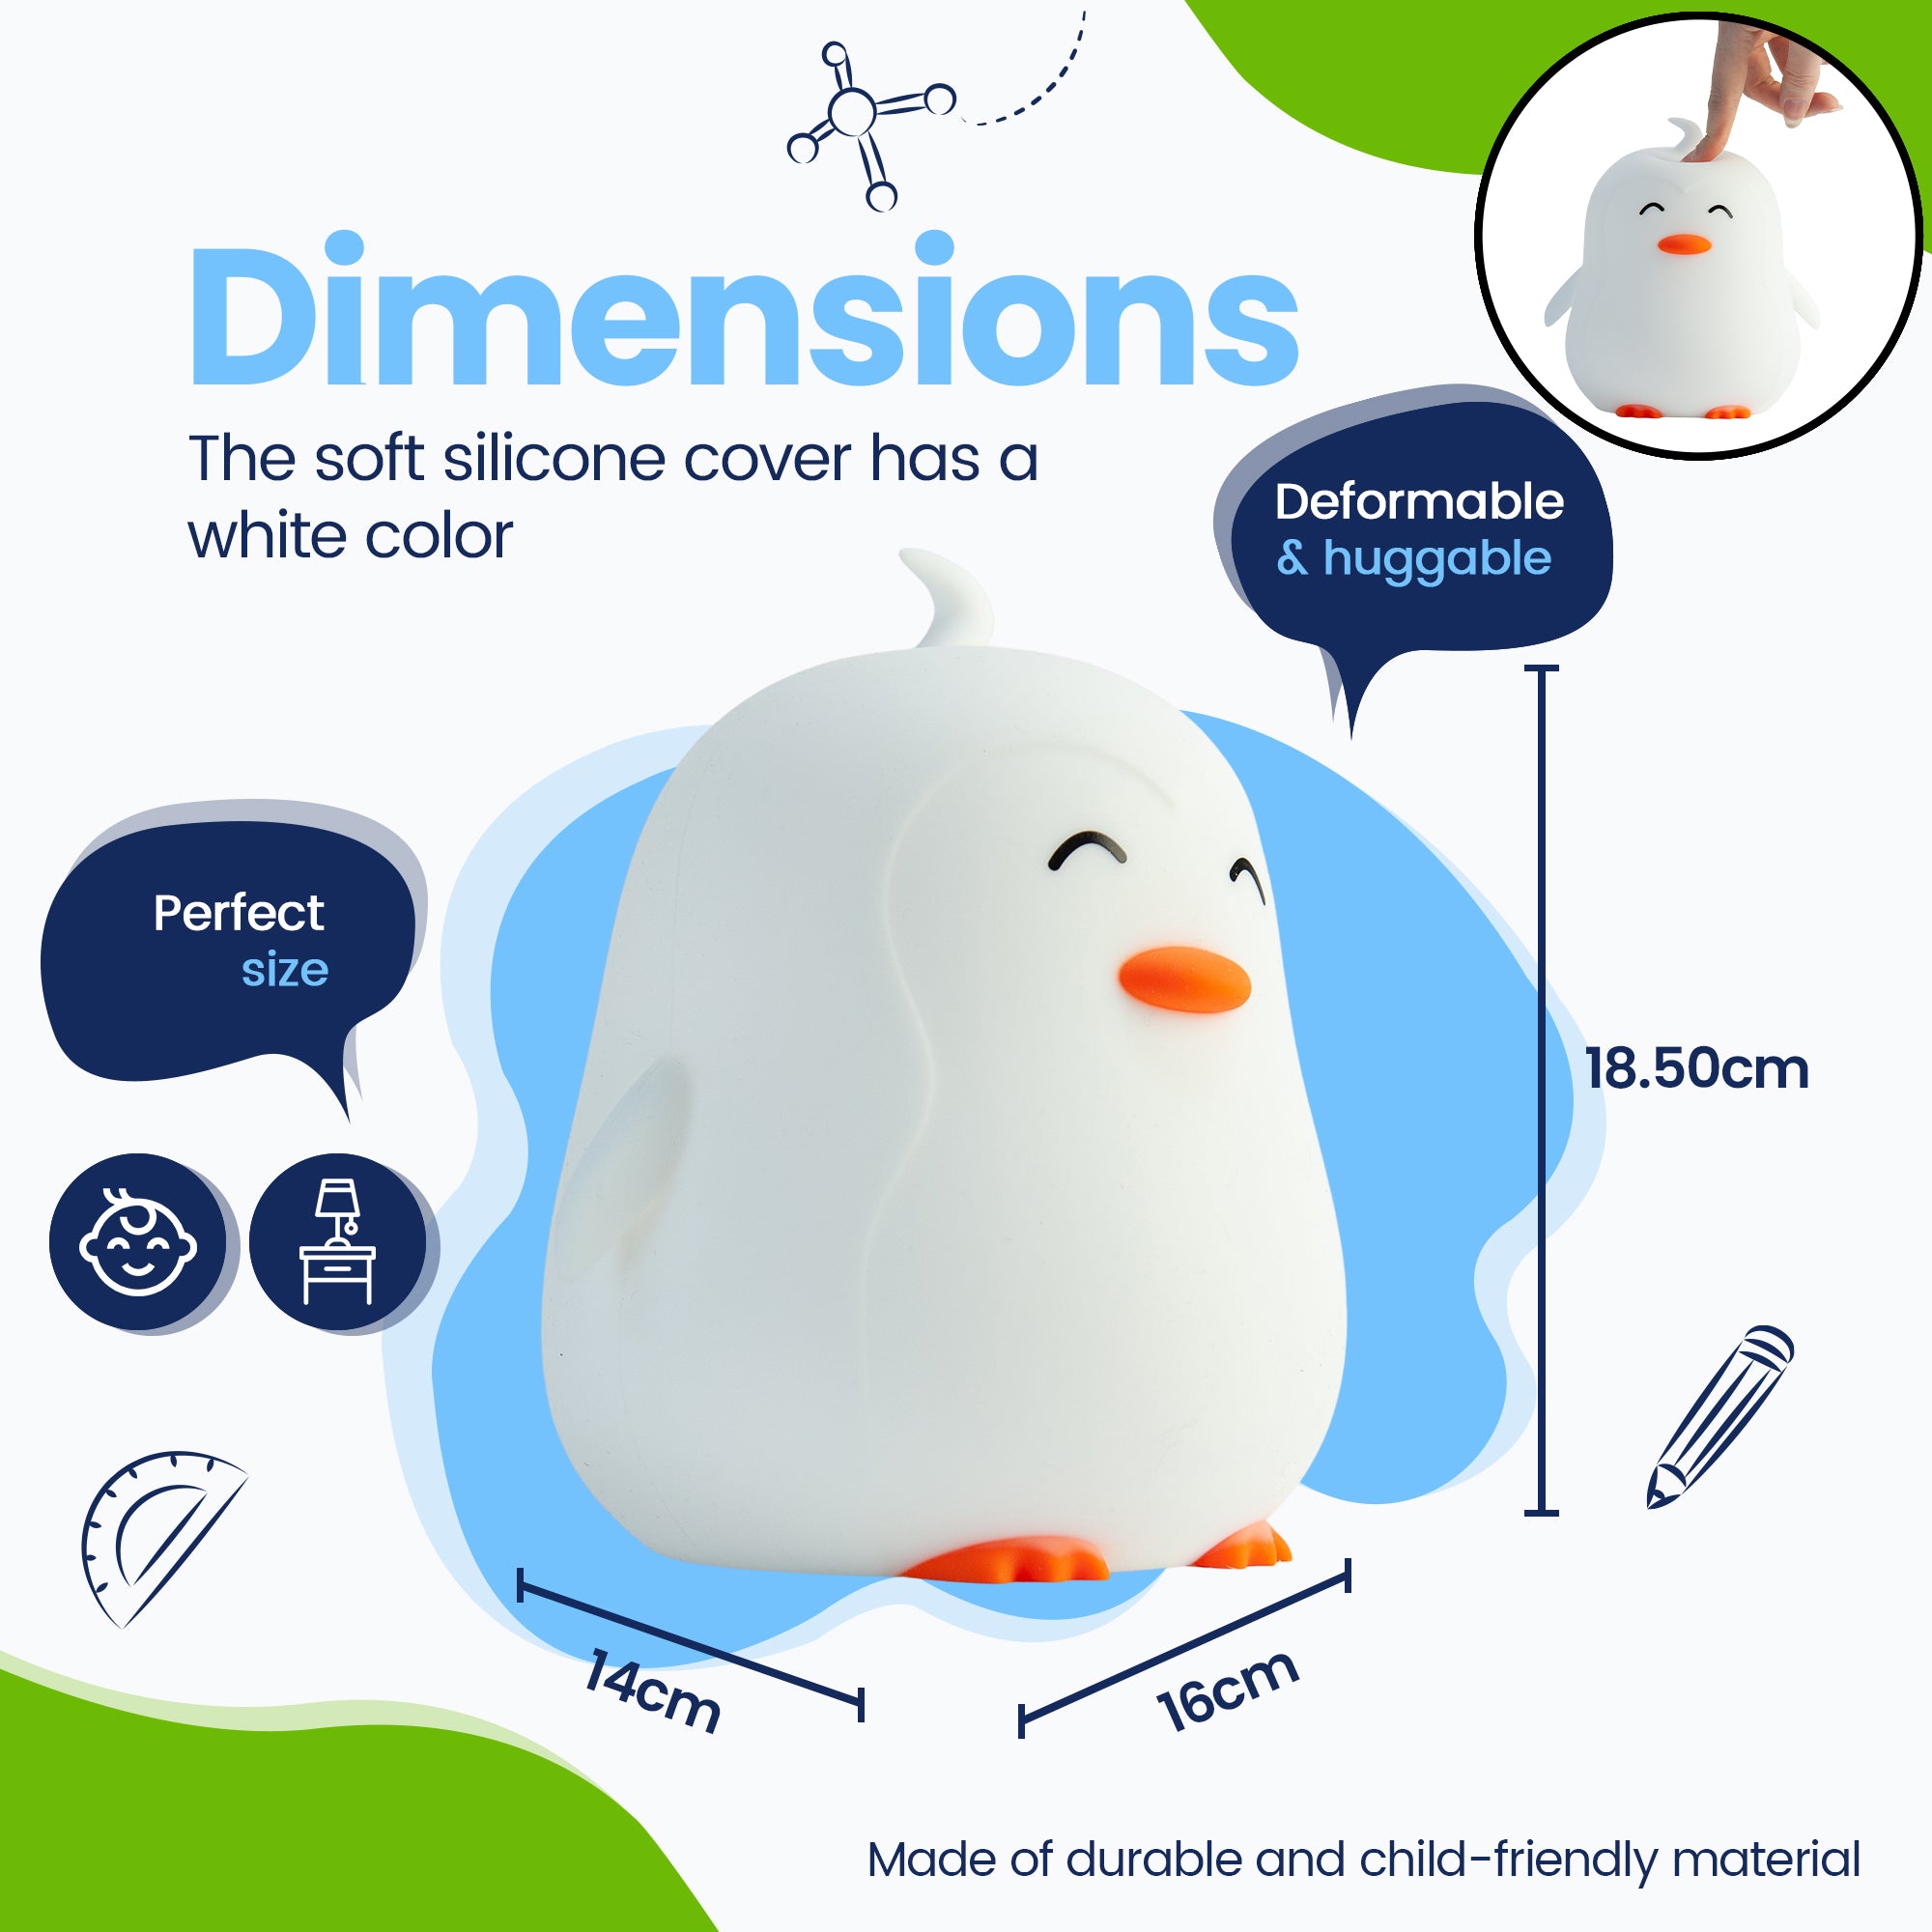 Dimensions Penguin Night Lamp - Perfect size - Premium Design - The silicone cover is white in color